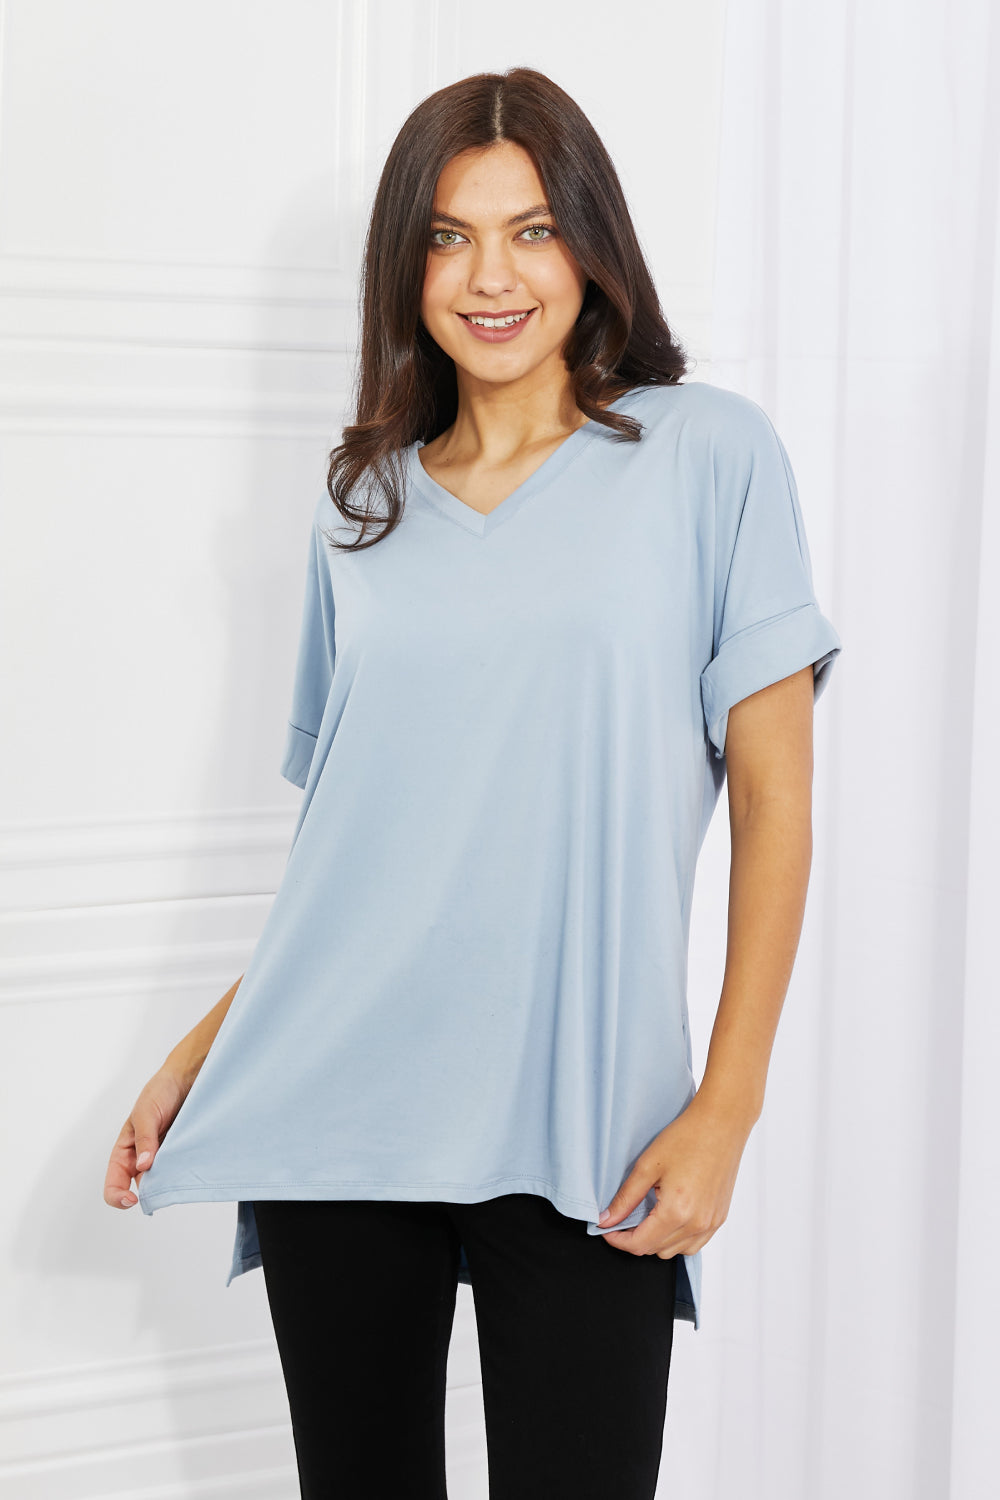 Zenana Simply Comfy Full Size V-Neck Loose Fit Shirt